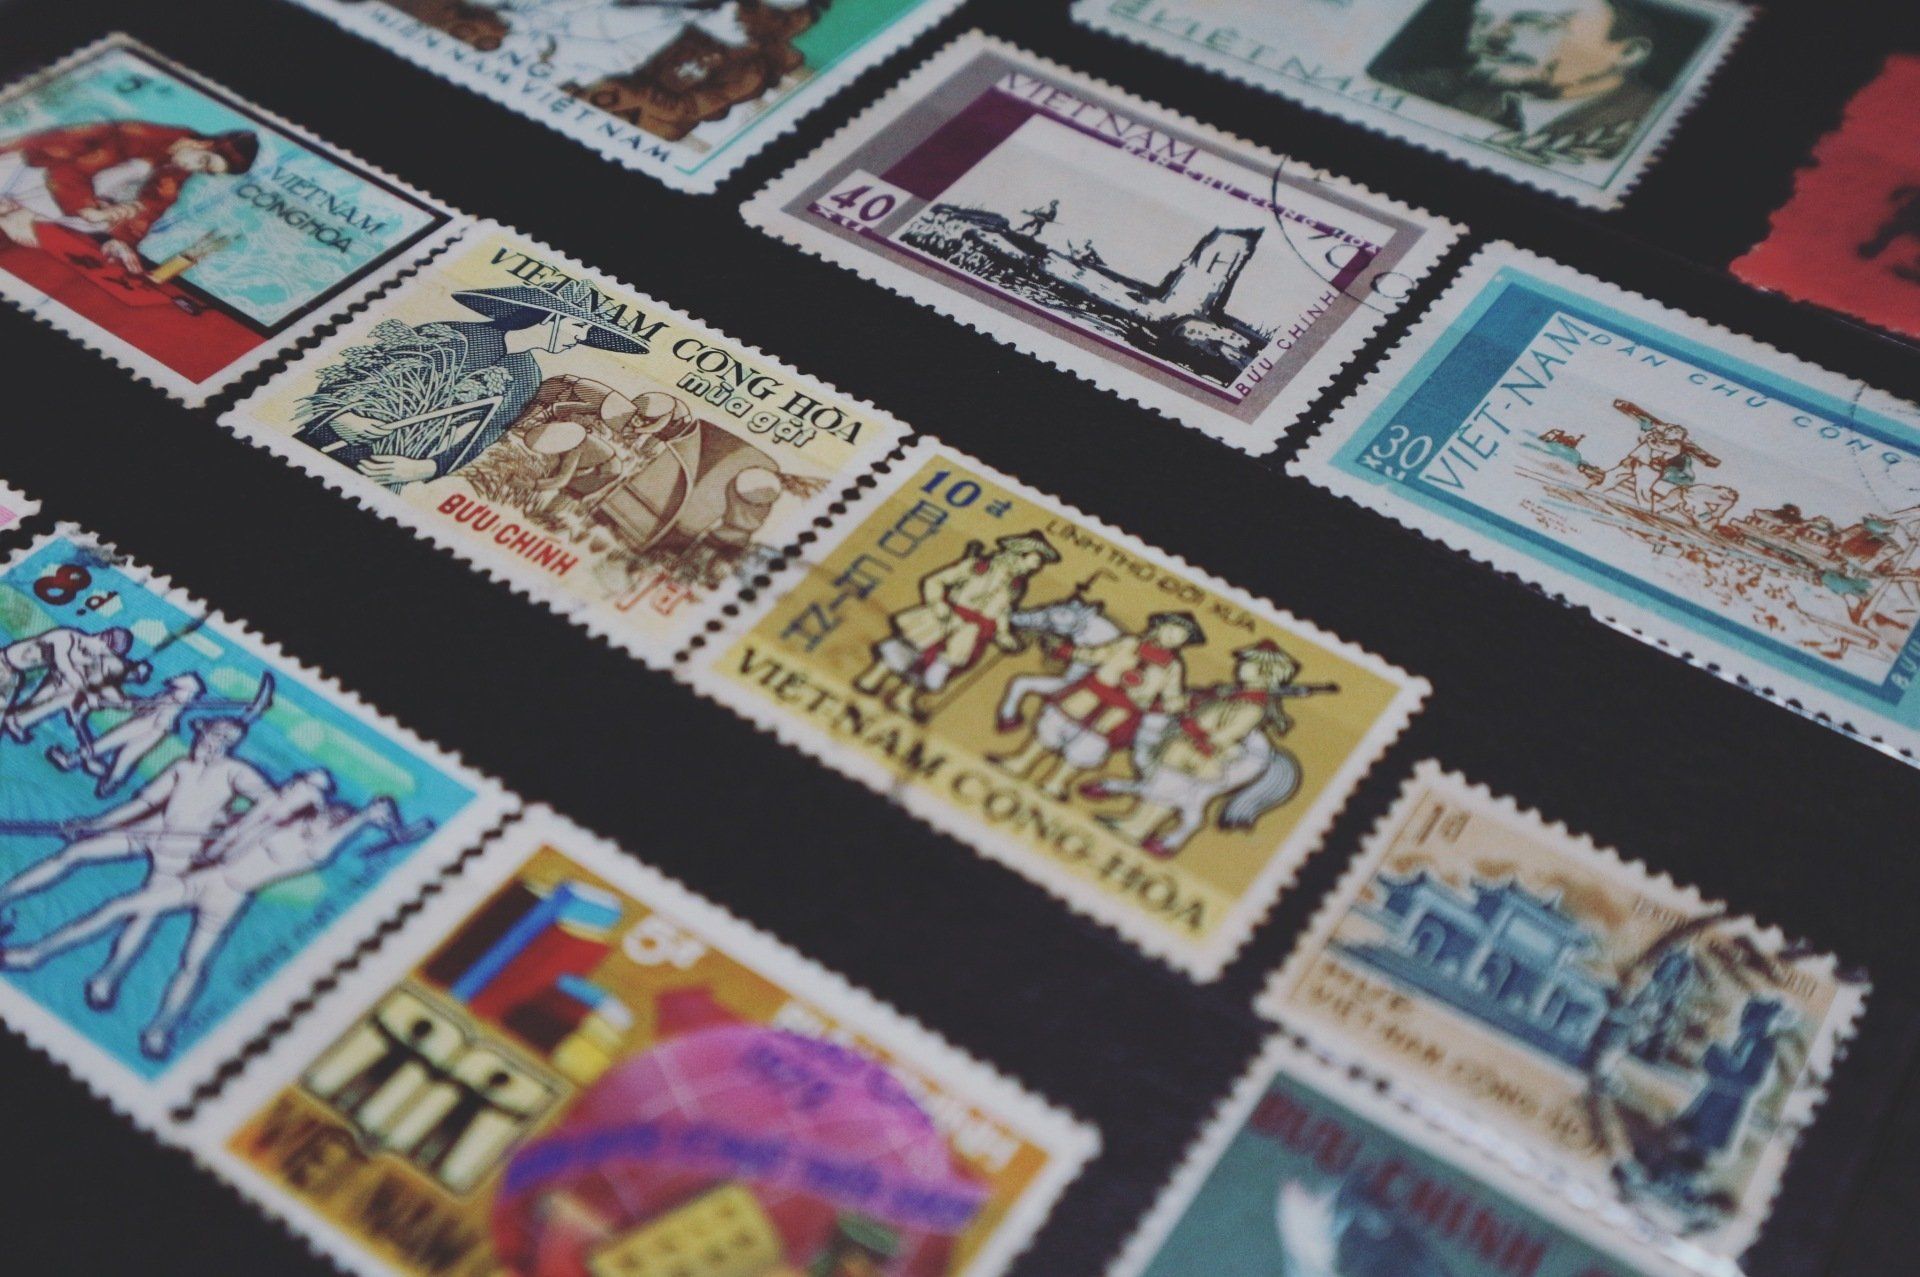 Custom Stamps